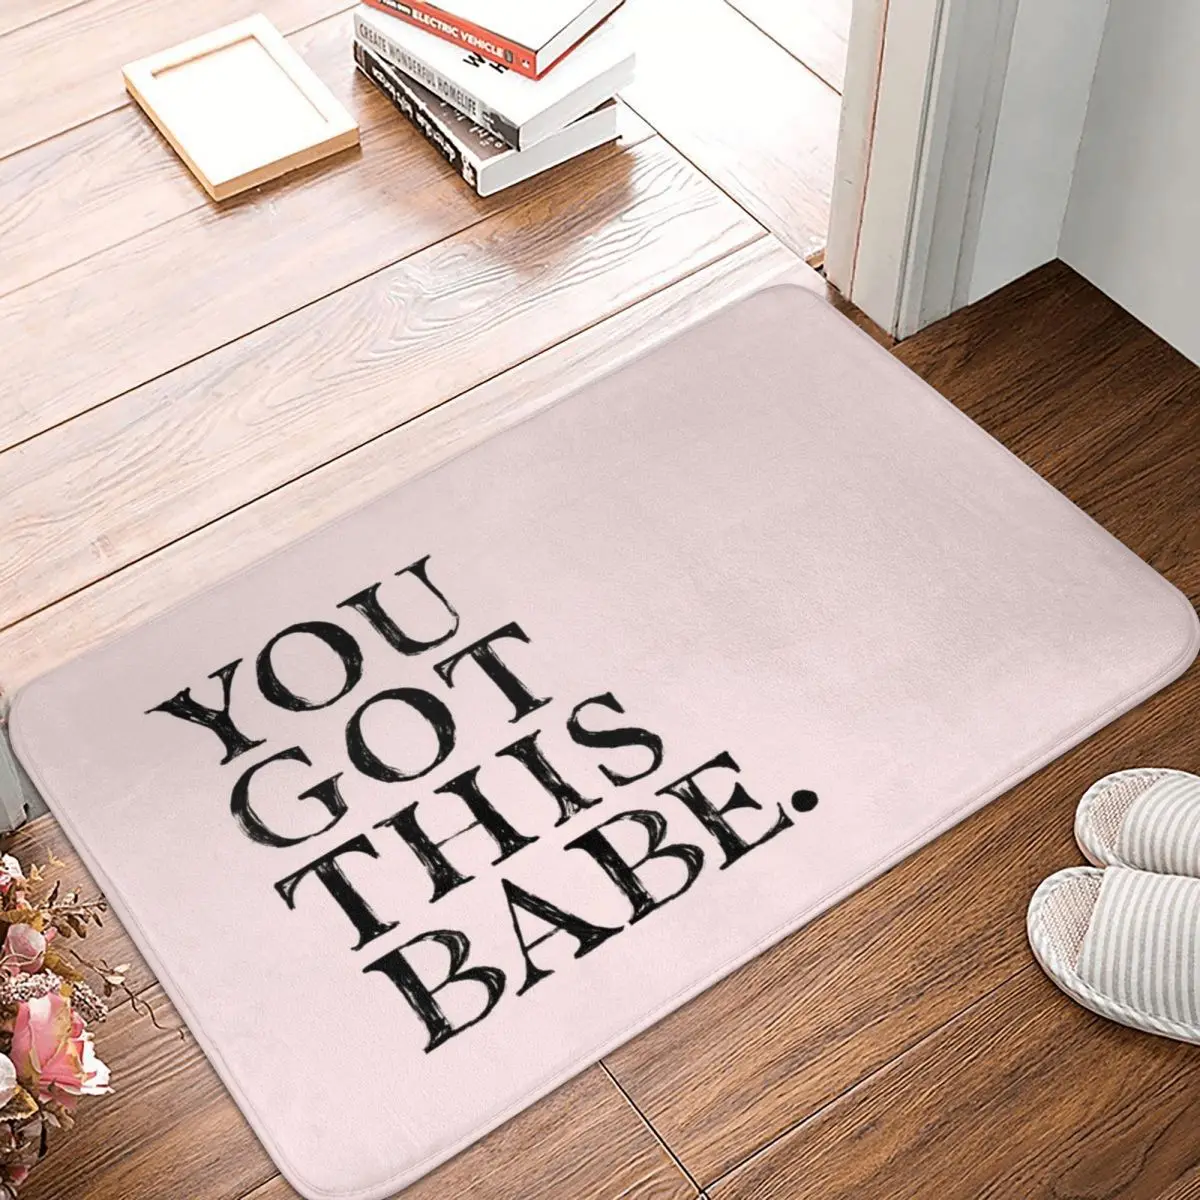 

You Got This Babe Doormat Carpet Mat Rug Polyester PVC Anti-slip Floor Decor Bath Bathroom Kitchen Bedroom 40*60